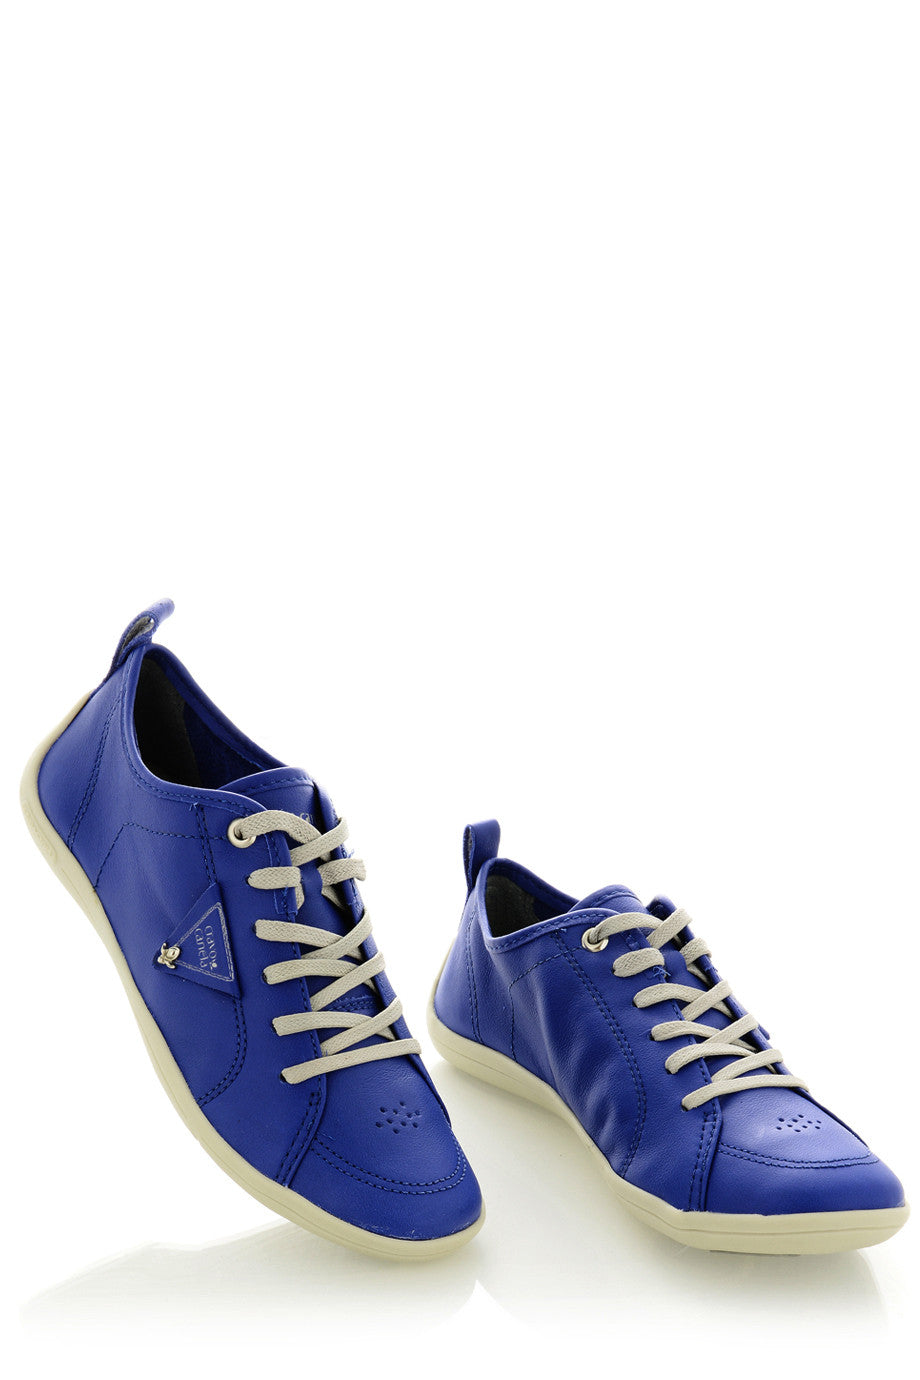 Stylish Royal Blue Air Huarache Run Women's Sneakers